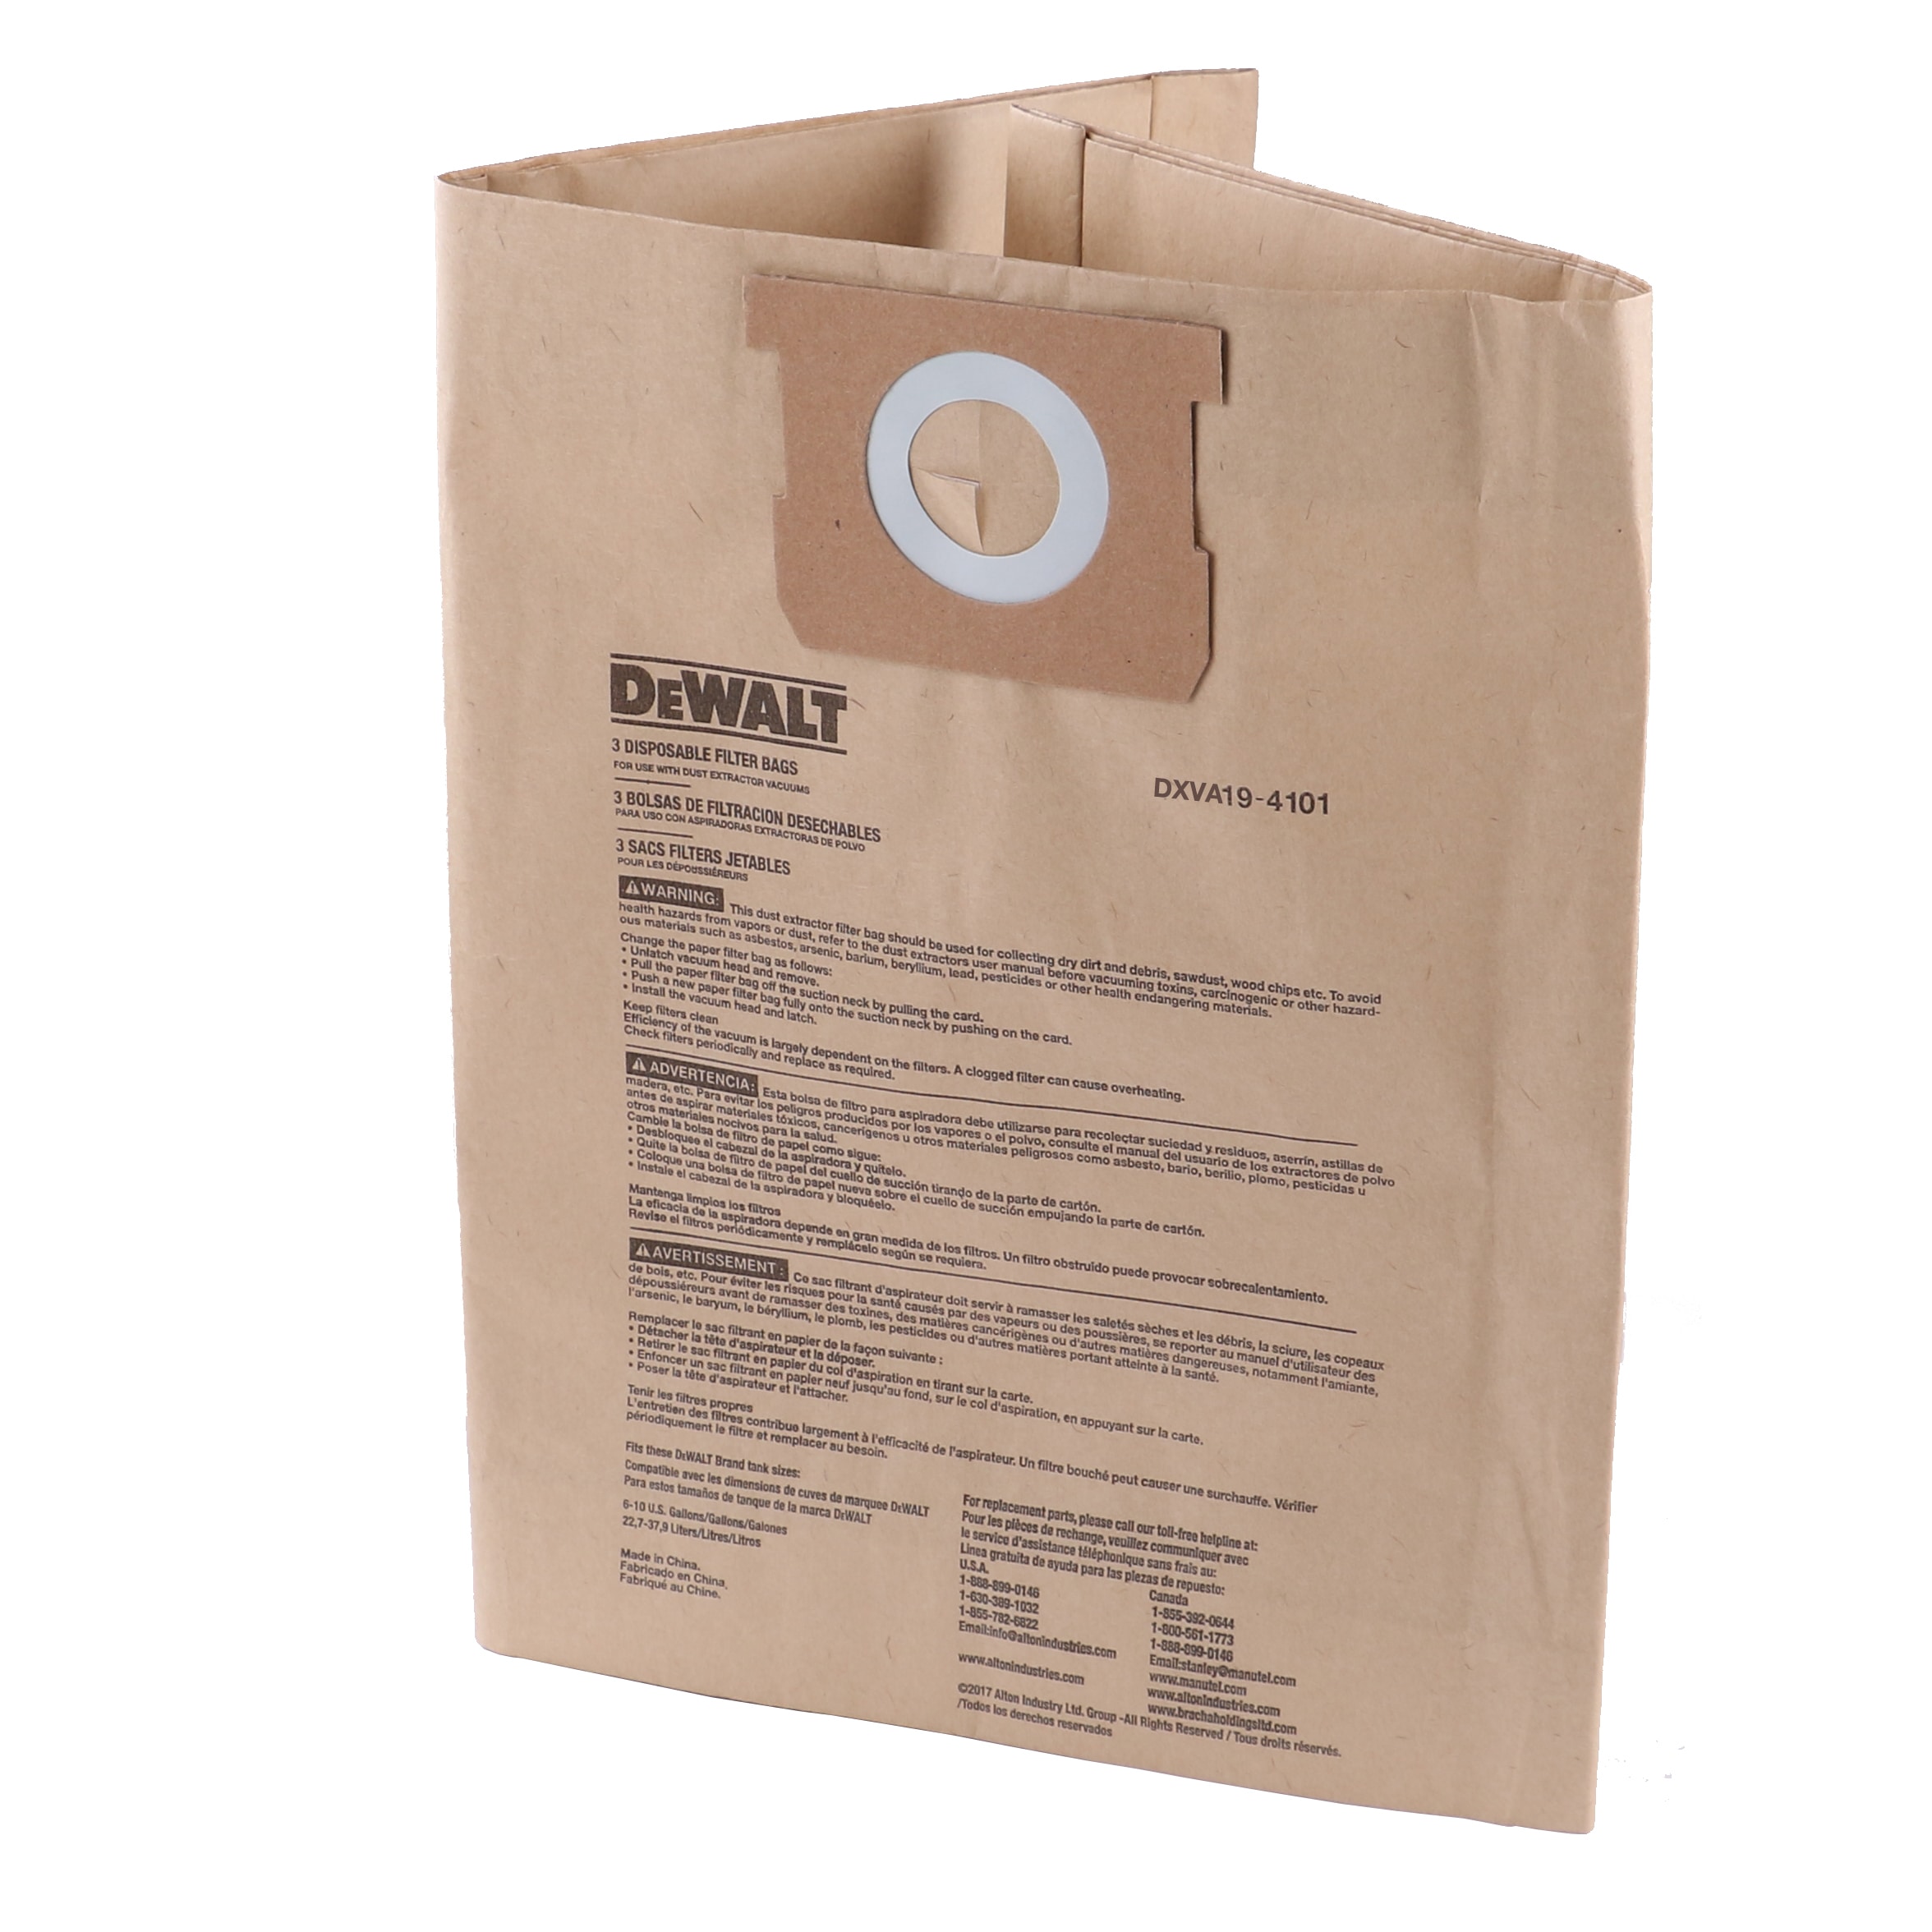 Part # DEWALT DXVA19-4101 & Vacmaster VHBM Puroom 10 Pack High Efficiency Replacement Filter Bags for DEWALT 6 to 10 Gallon Wet/Dry Vacs